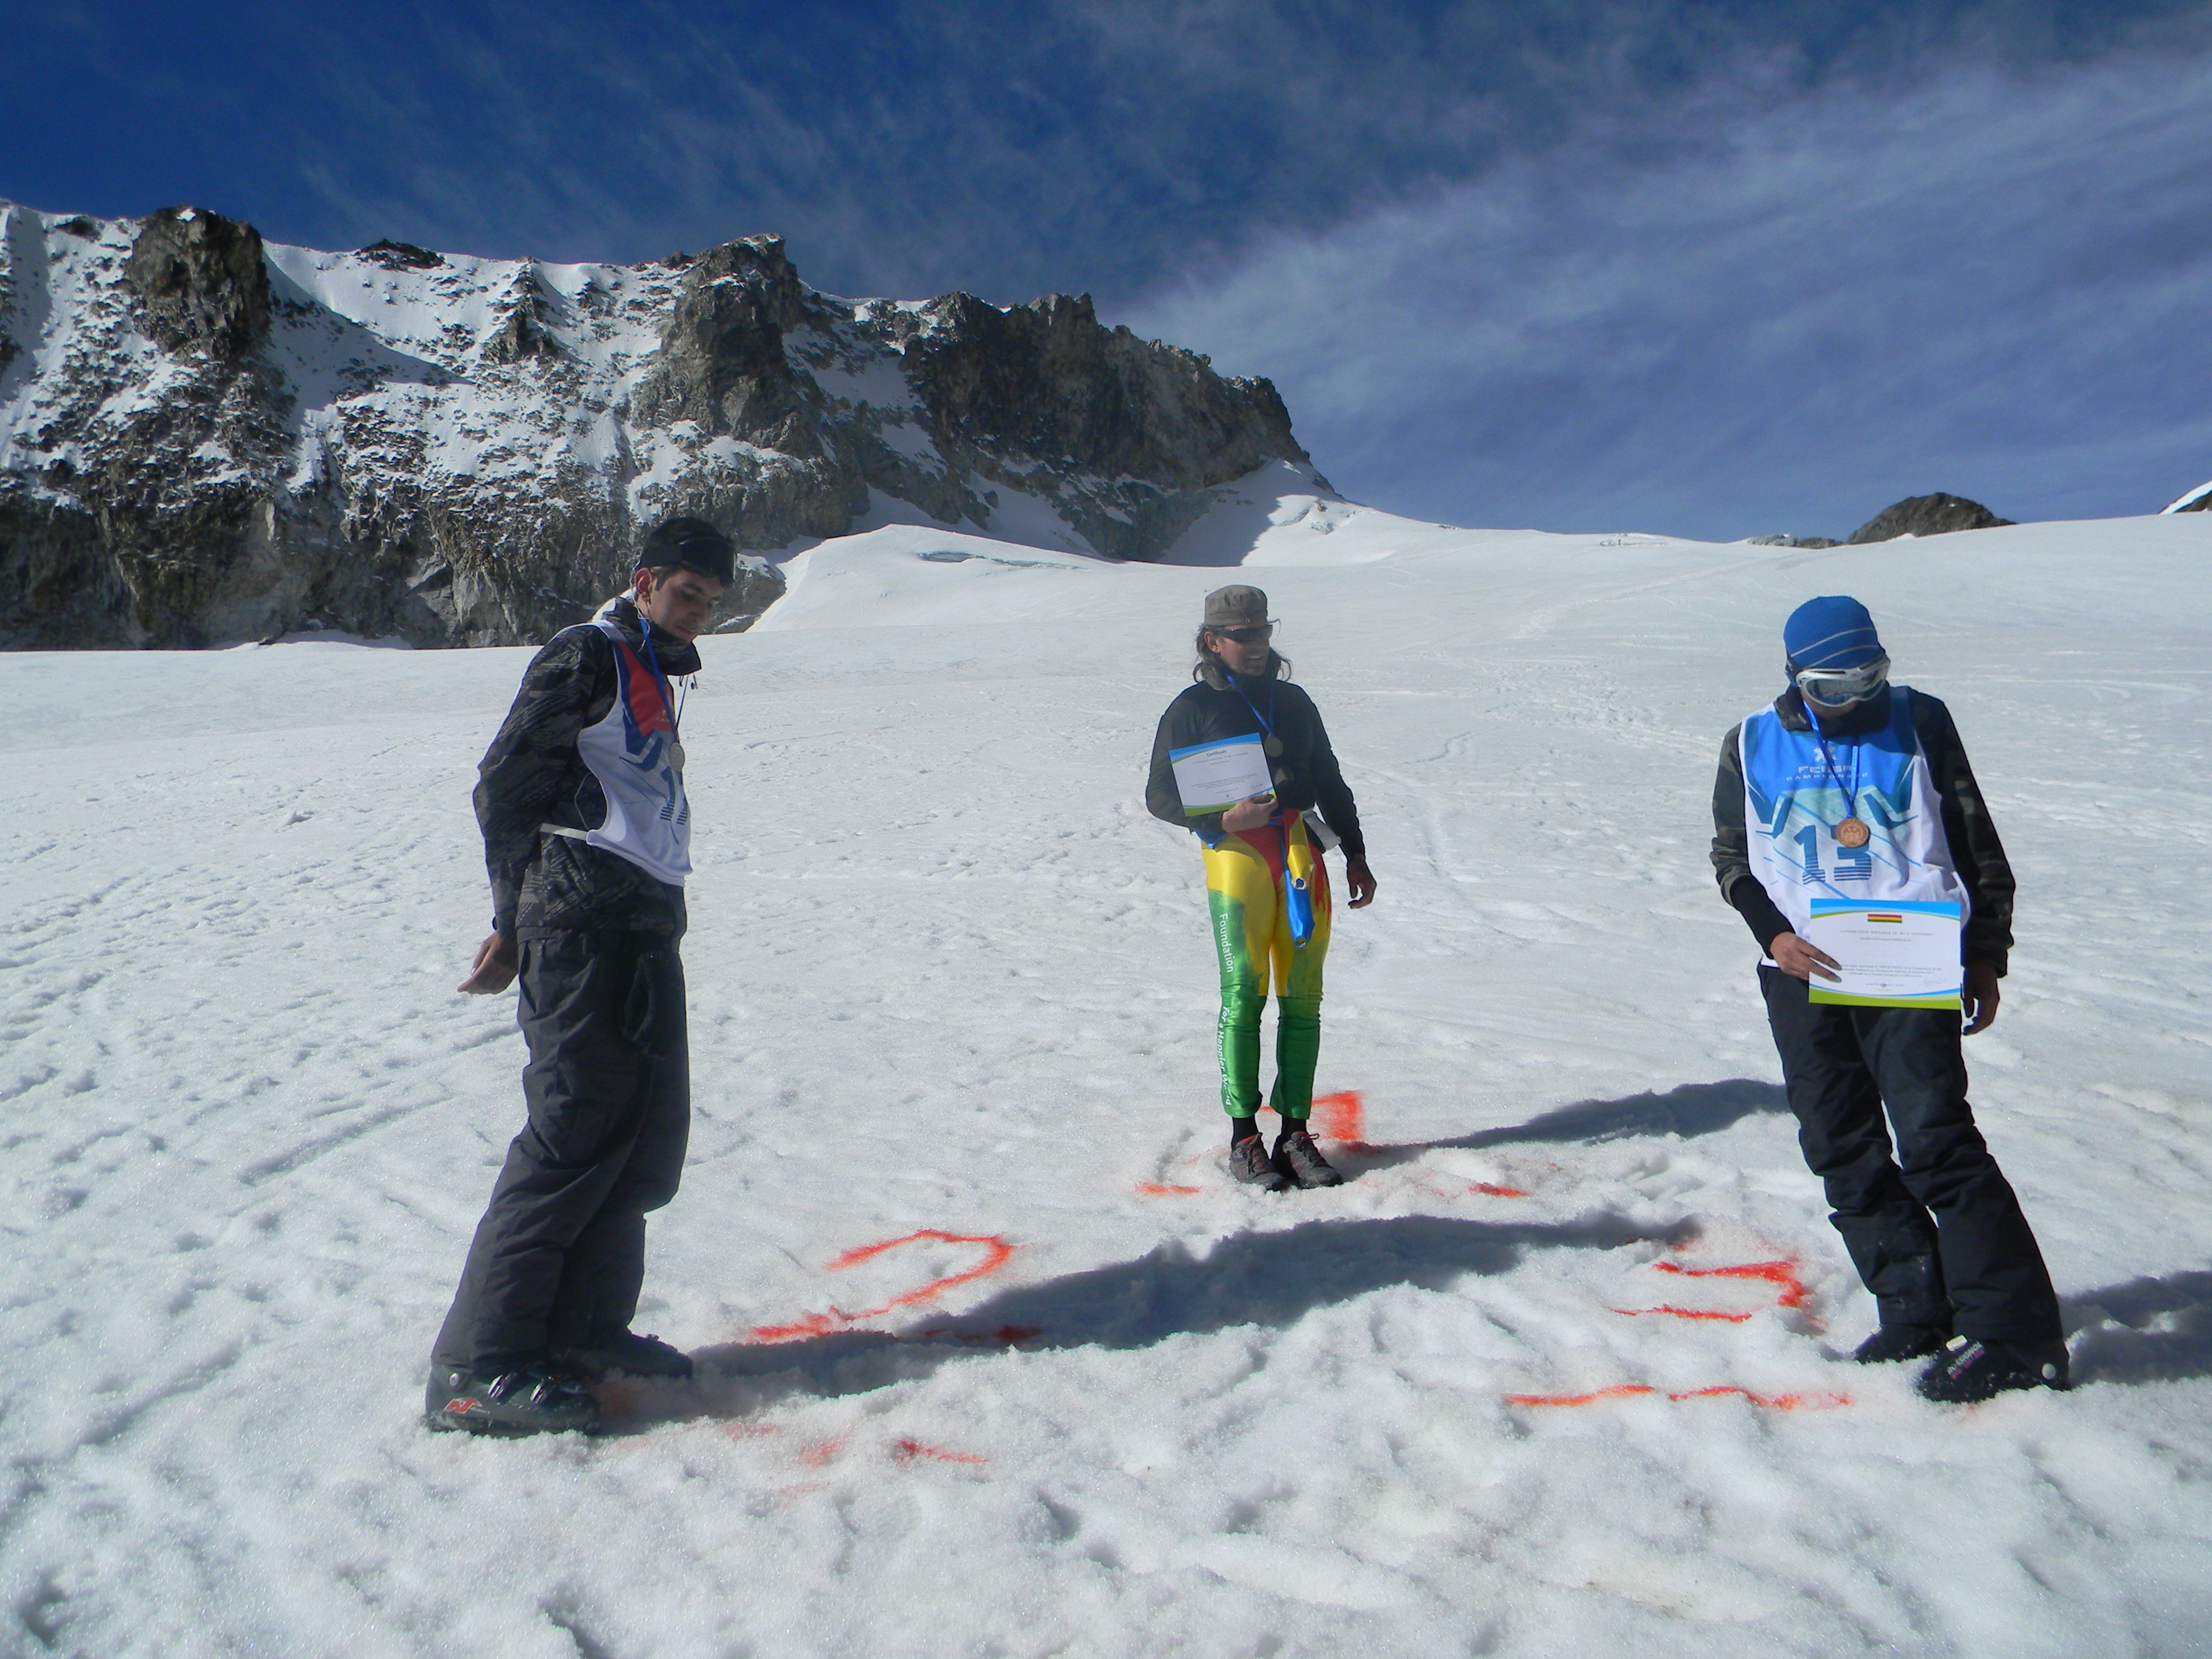 campeonato de ski 2011, Chacaltaya